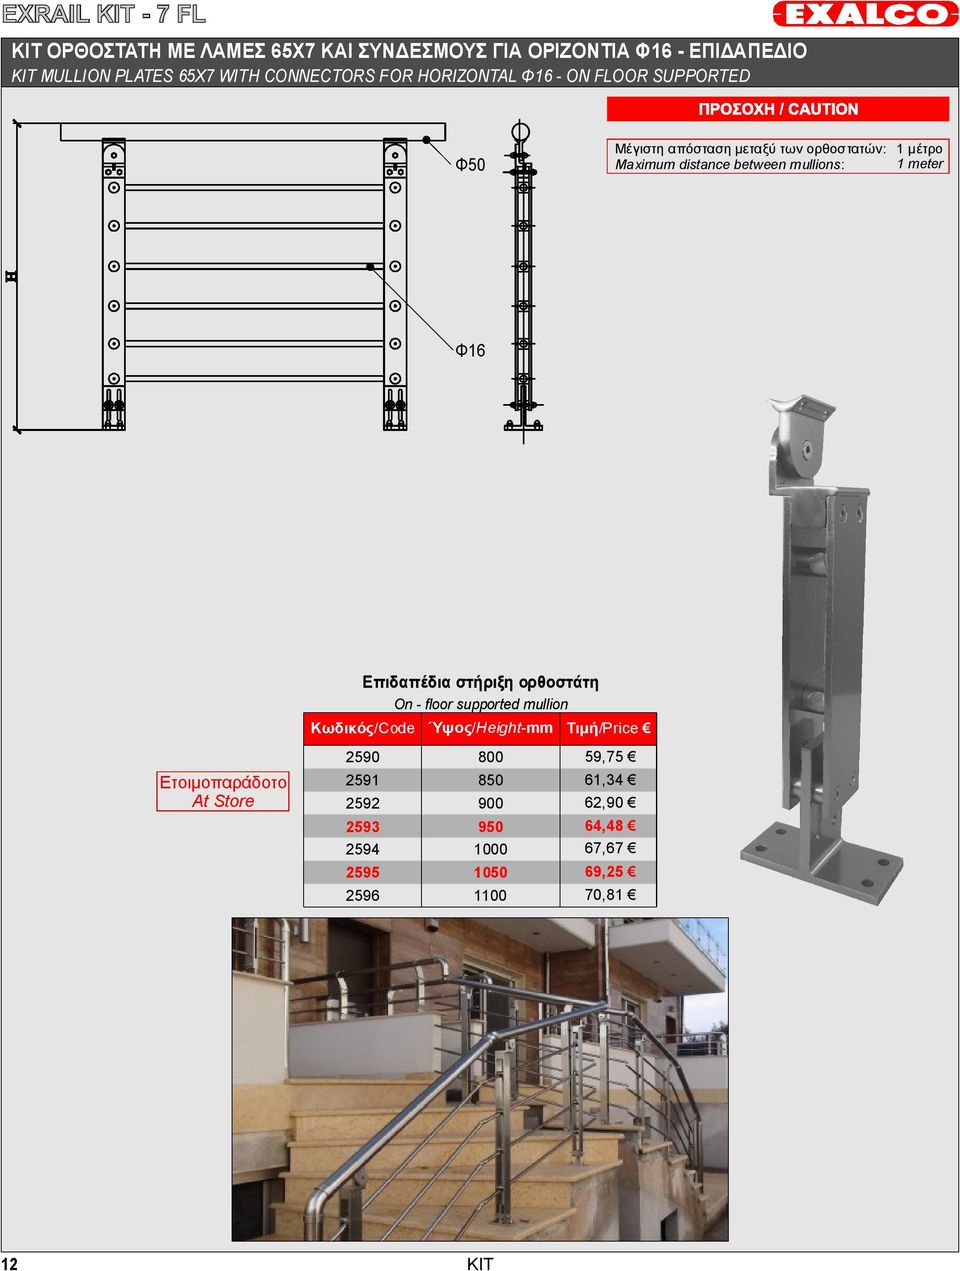 1meter Φ16 Επιδαπέδια στήριξη ορθοστάτη On -floor supported mullion Κωδικός/Code Ύψος/ Height-mm Τιμή /Price 2590 800